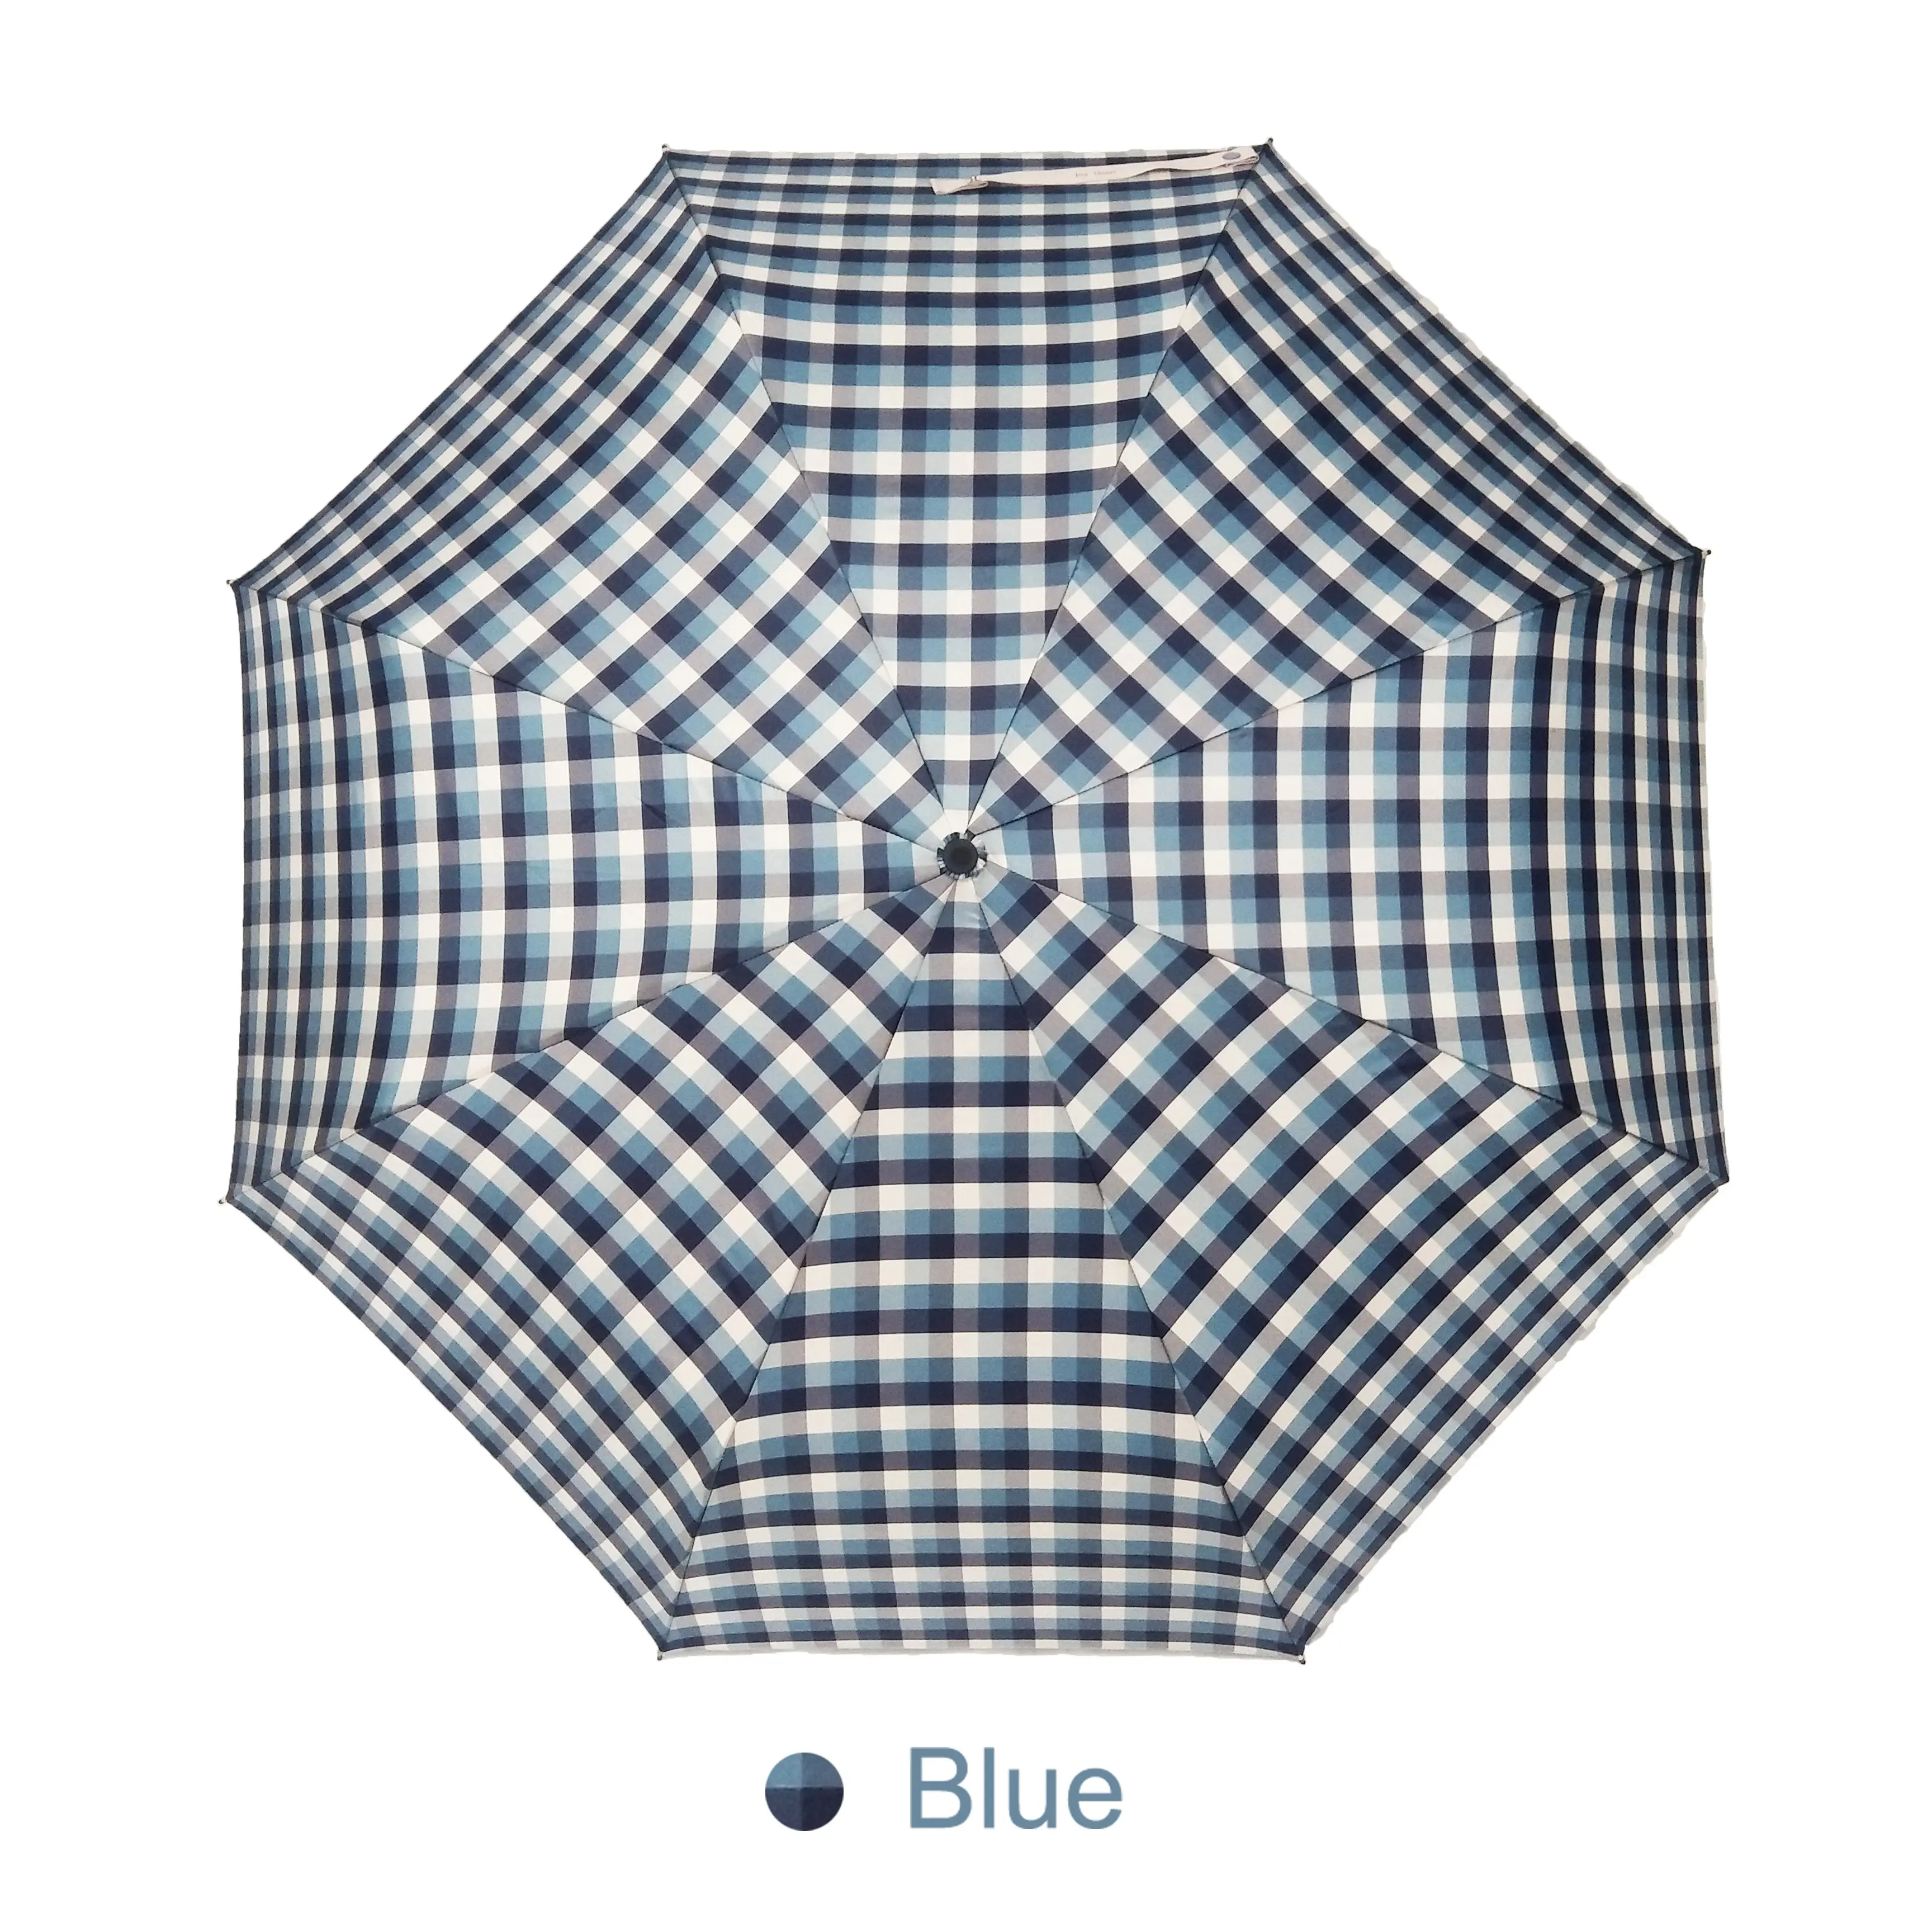 Umbrella Manufacturer Fully Automatic 3 Folding Plaid Fabric Umbrella Open And Close With Customized